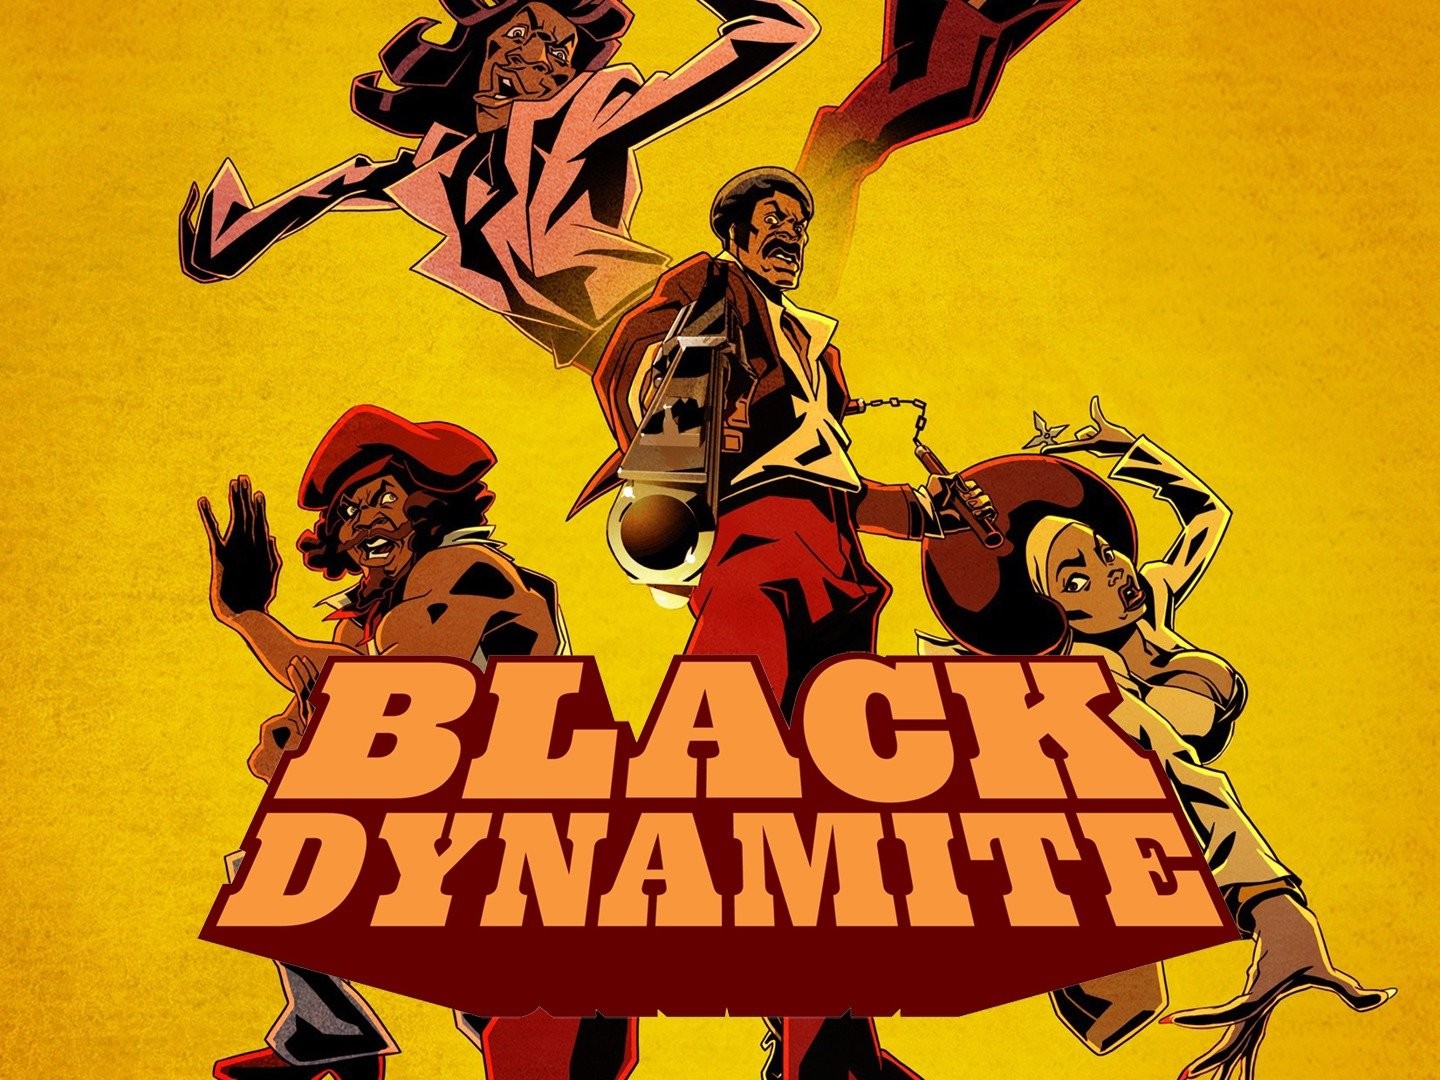 Black Dynamite (series, 2012 – 2015)